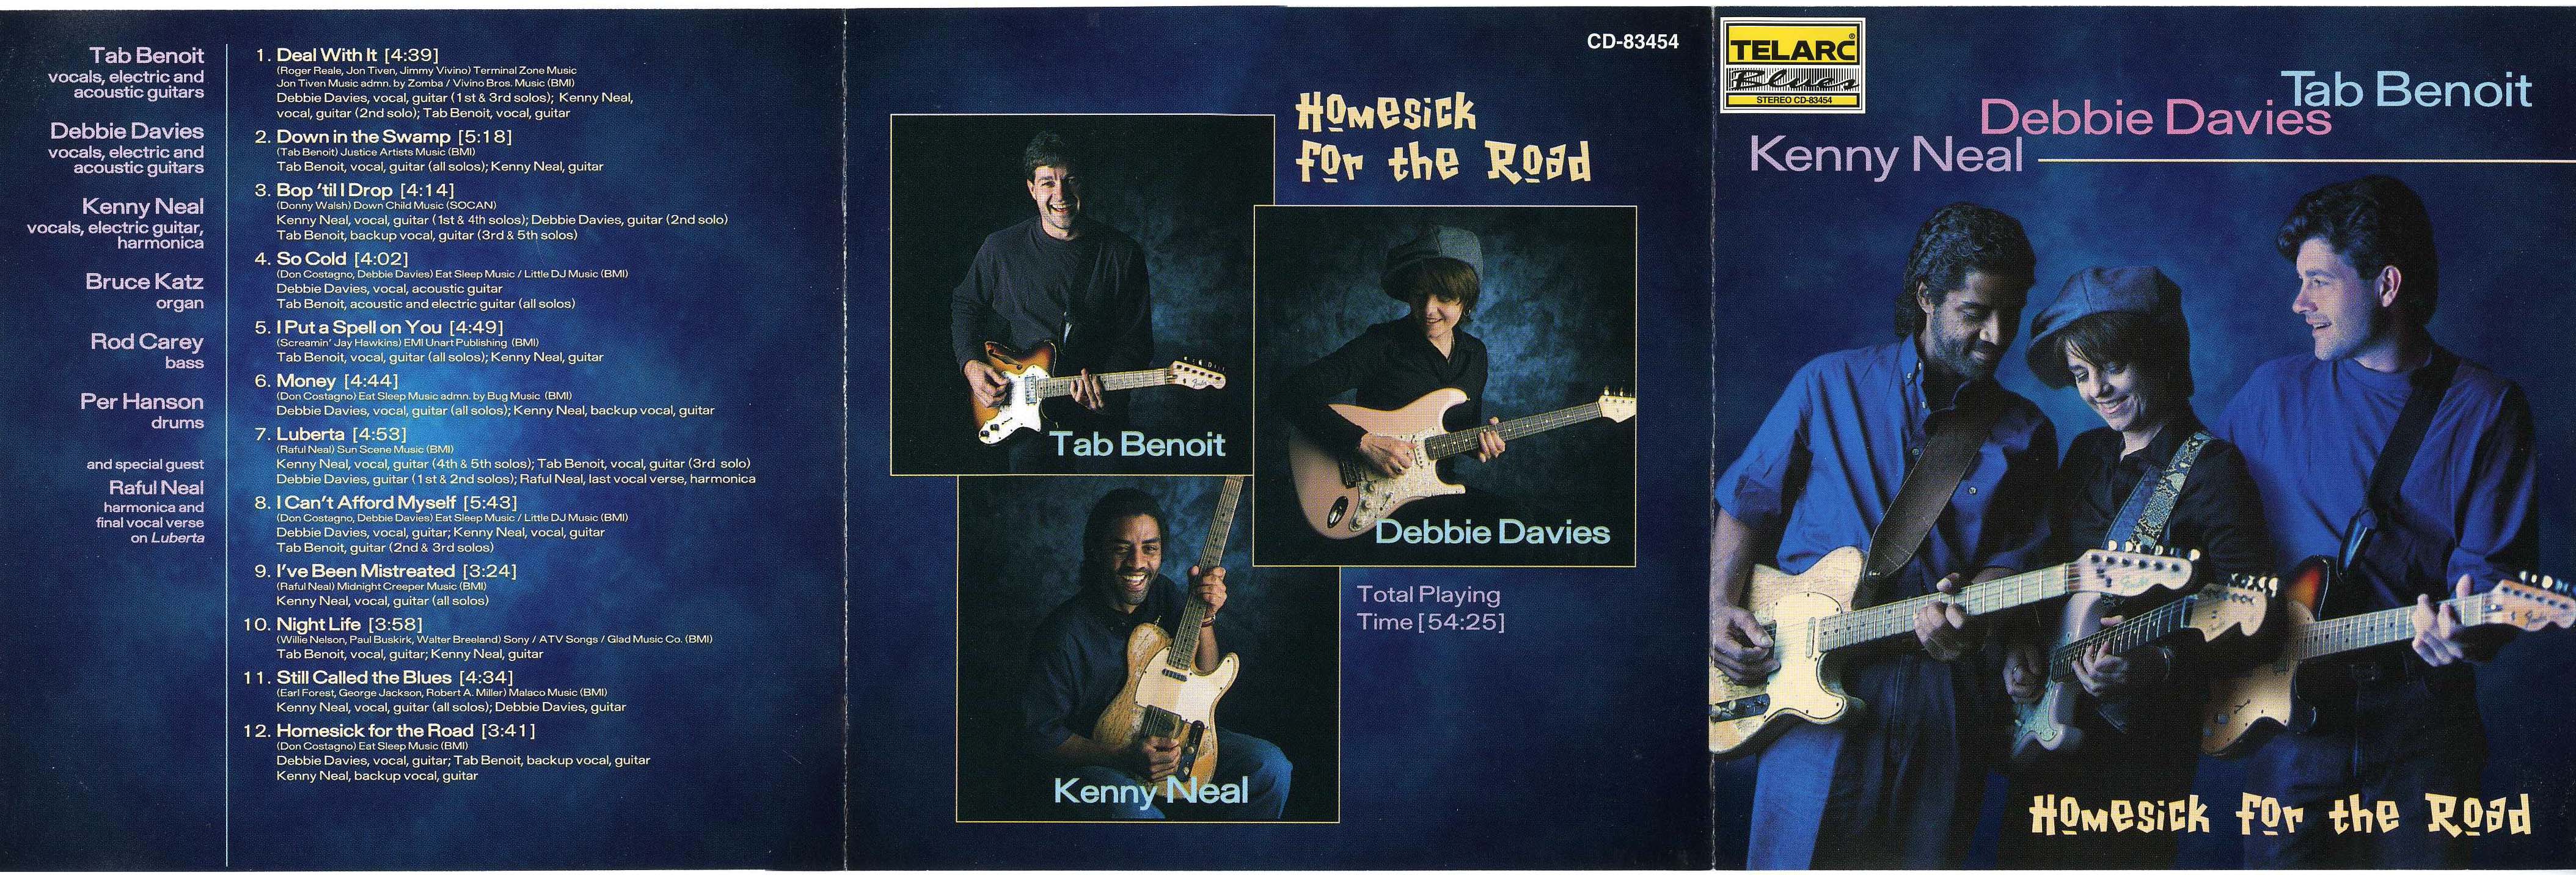 Tab Benoit, Debbie Davies, Kenny Neal Homesick for the Road 1999